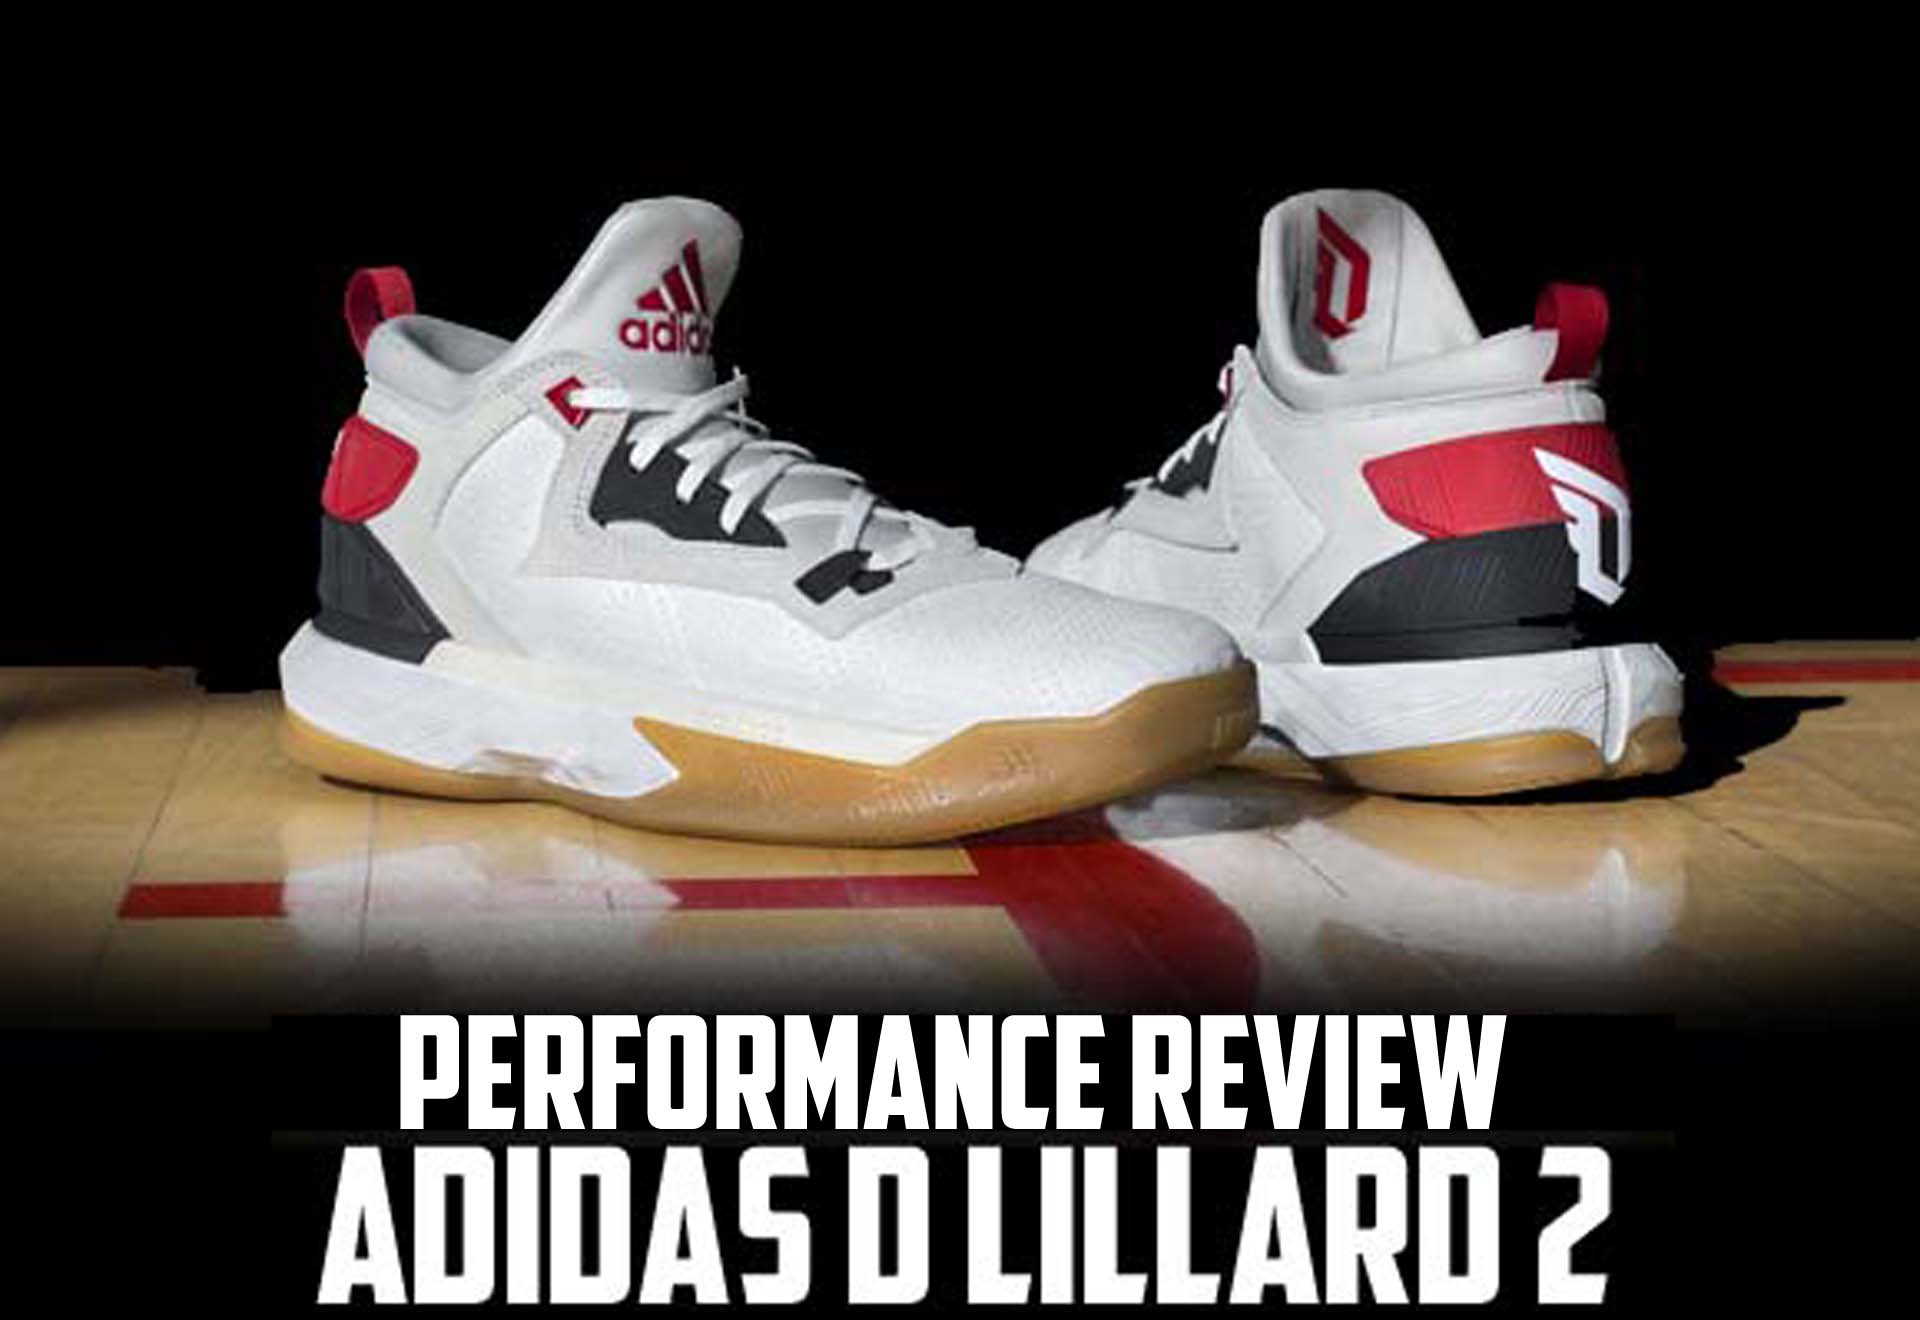 adidas d lillard 2 performance review main